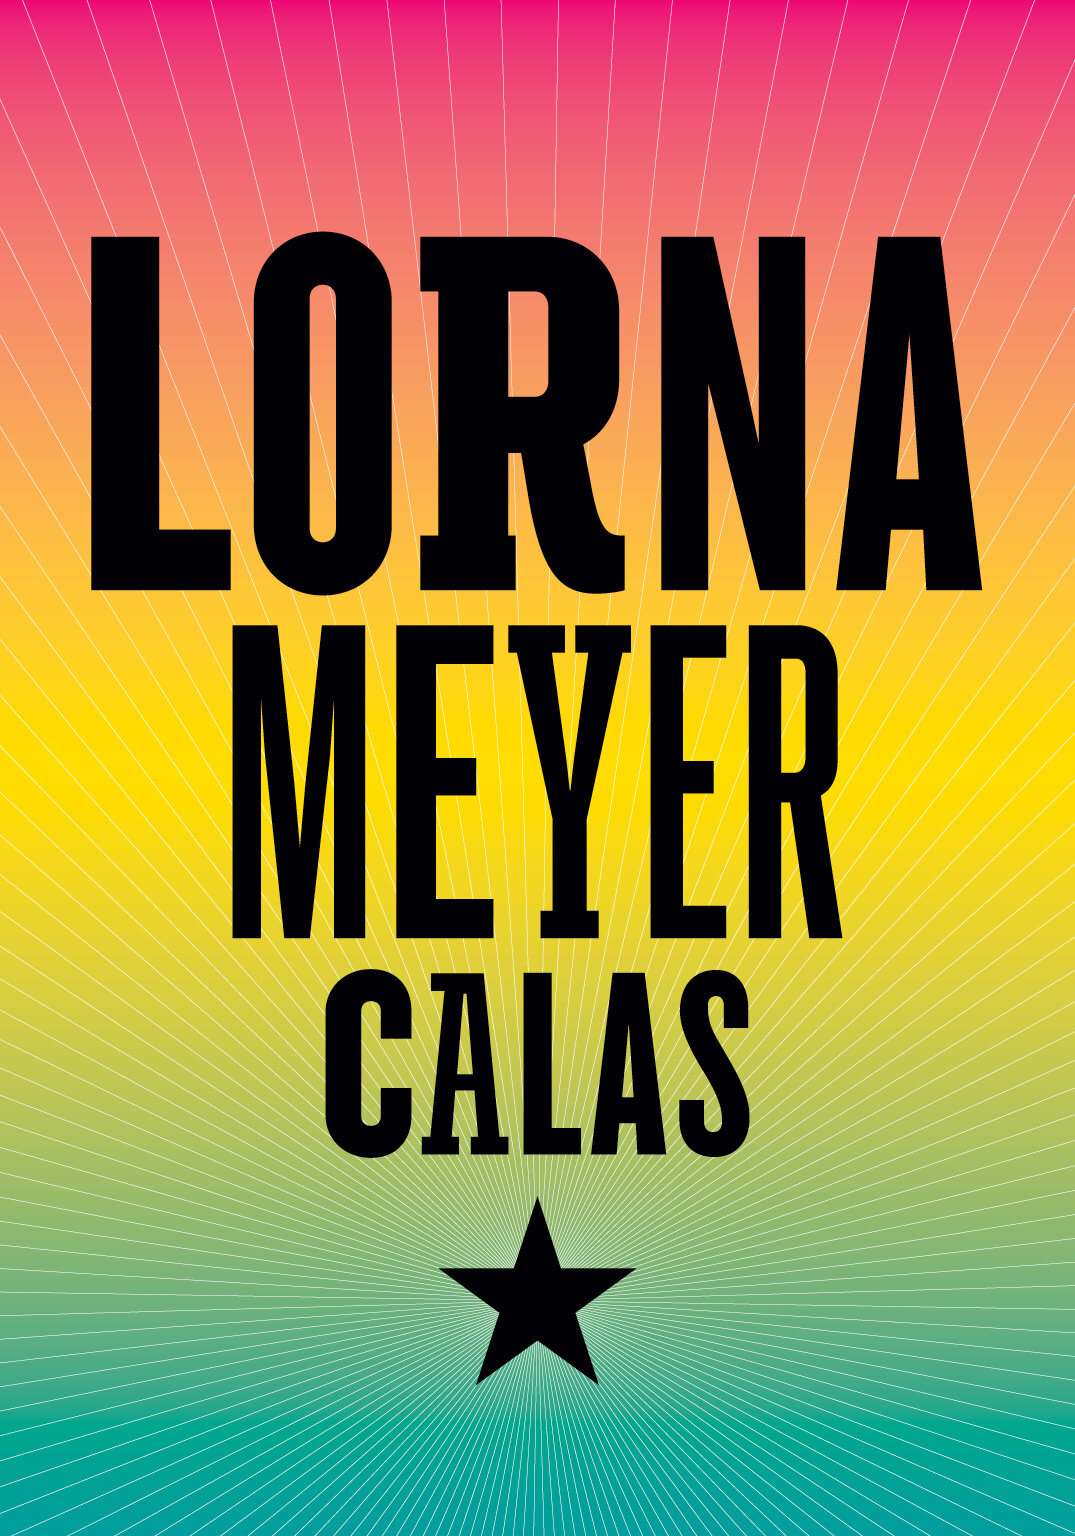 CCA Gala 2020 Lorna Meyer Calas thumbnail.jpg